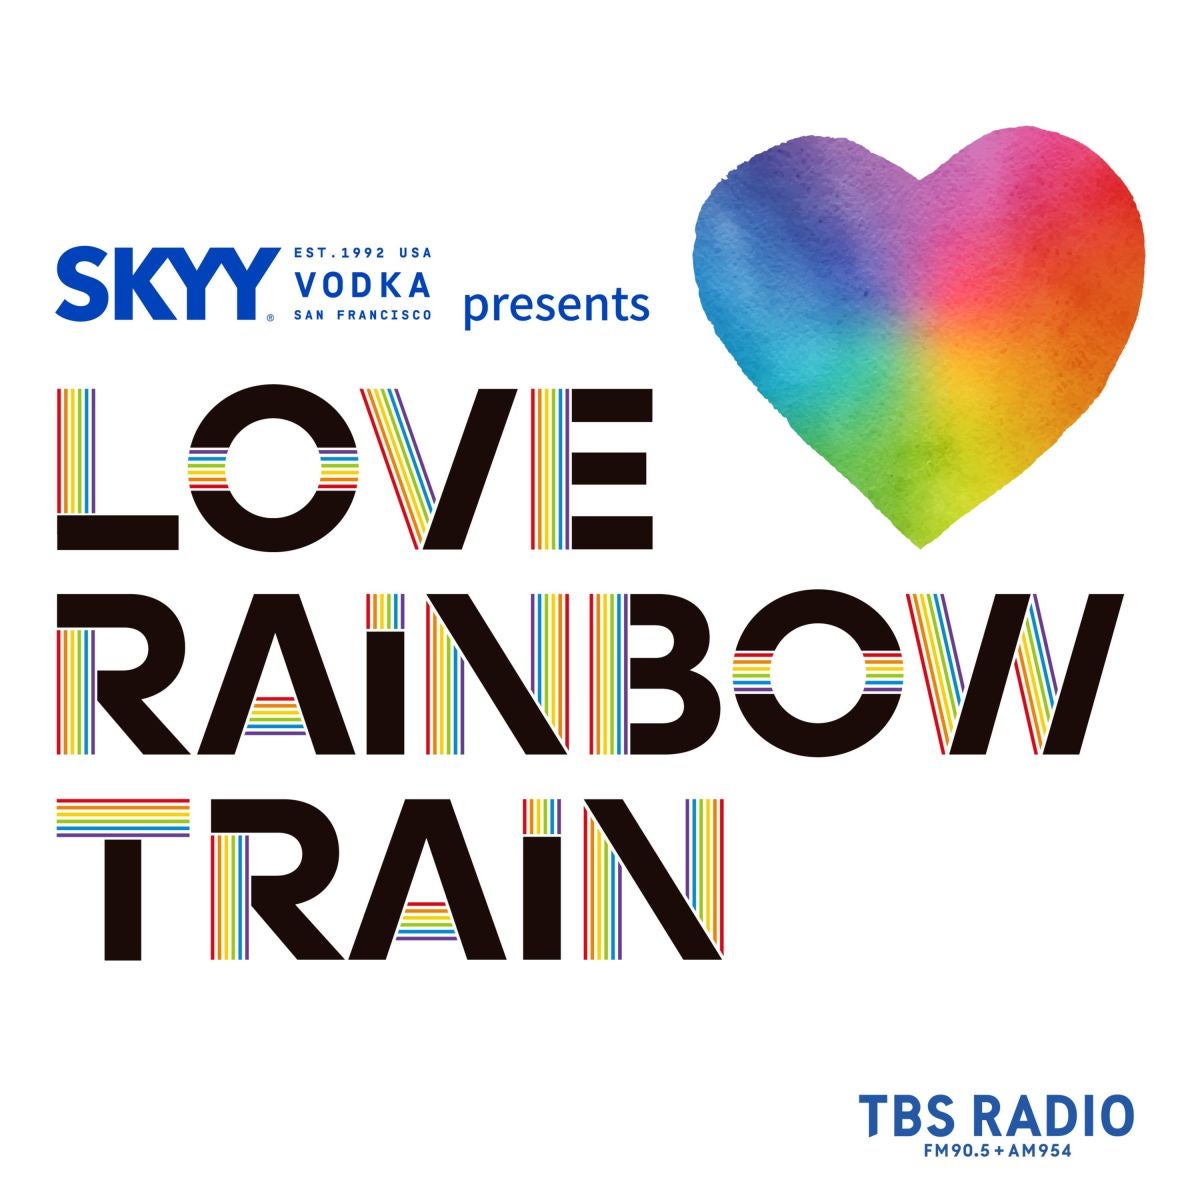 SKYY VODKA presents LOVE RAINBOW TRAIN